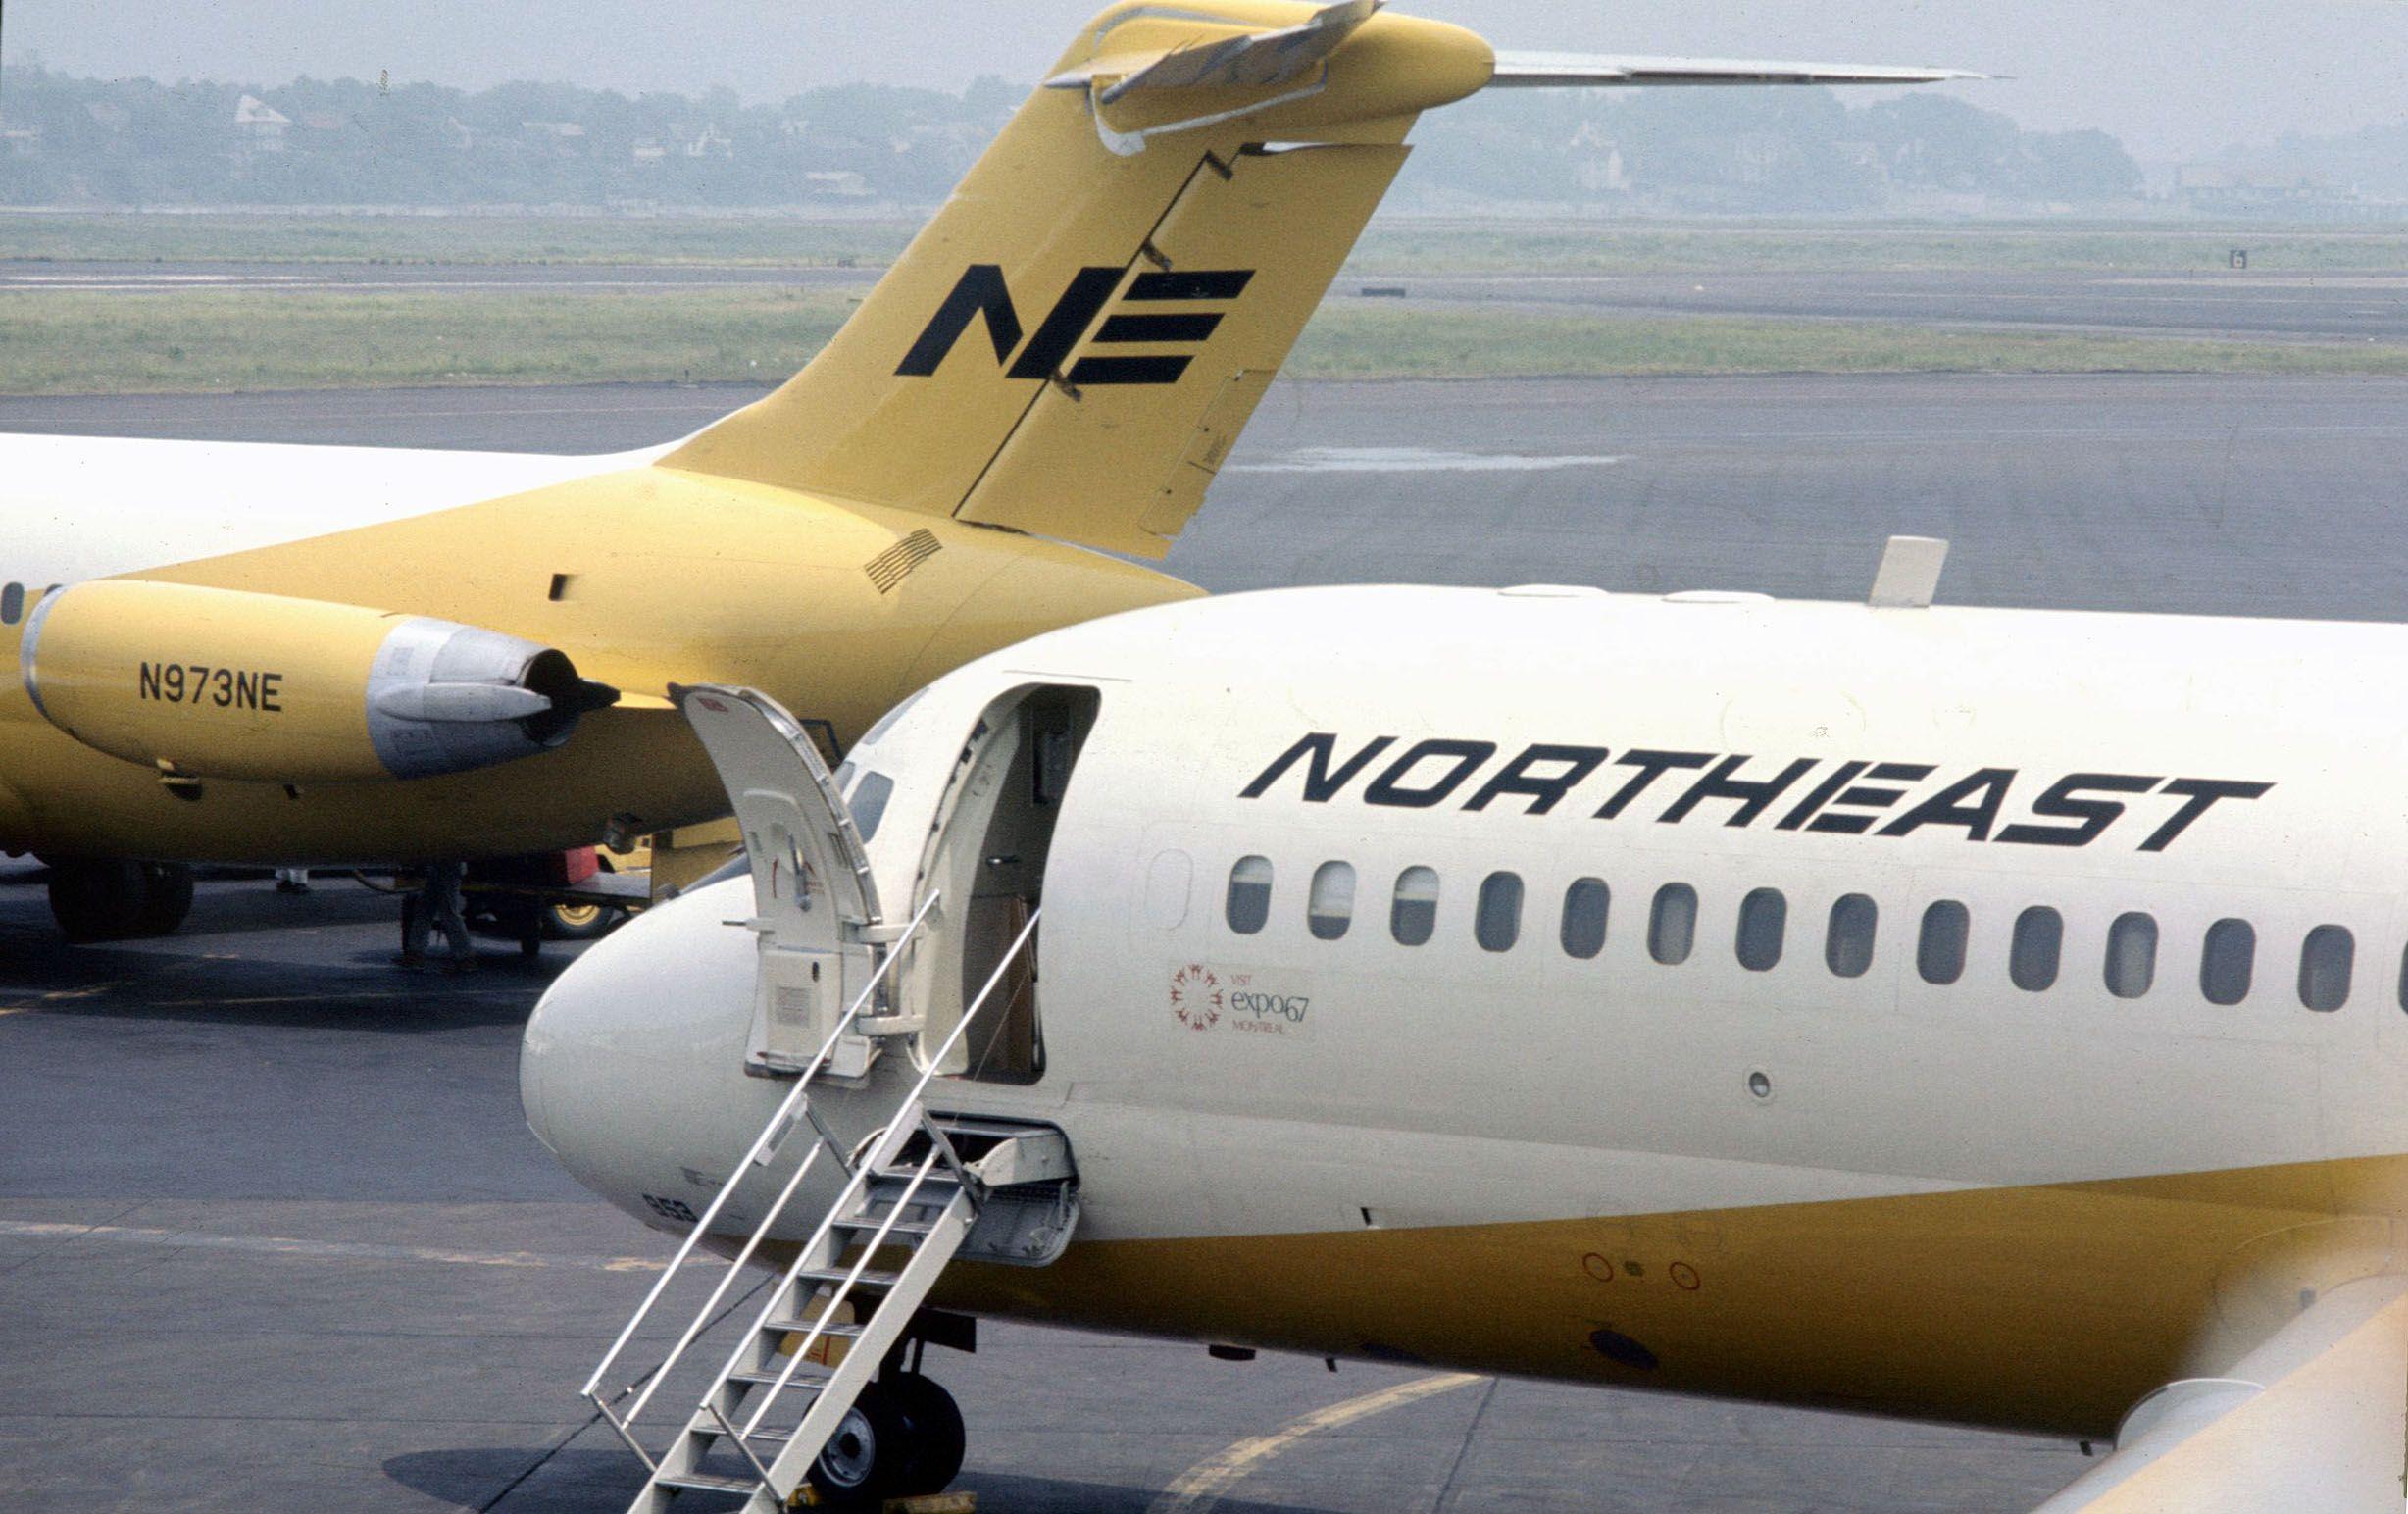 Yellow Bird Airline Logo - Northeast Airlines Yellowbirds - PlaneViz